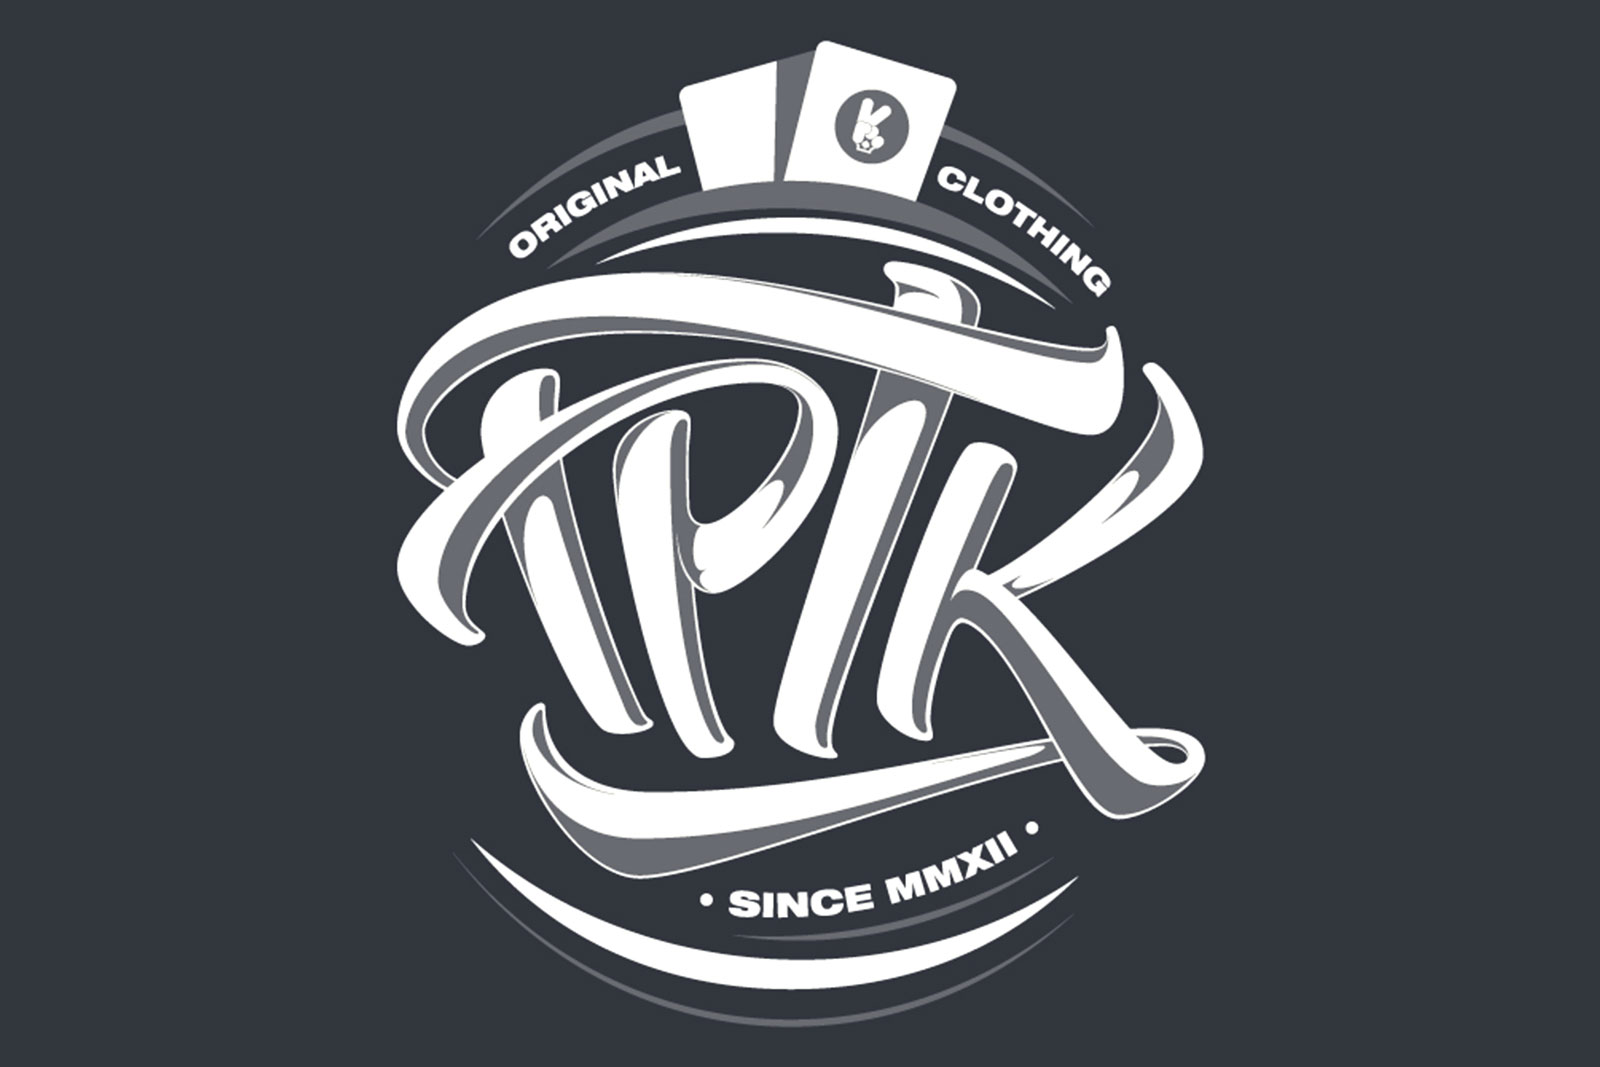 Poker TPTK Clothing